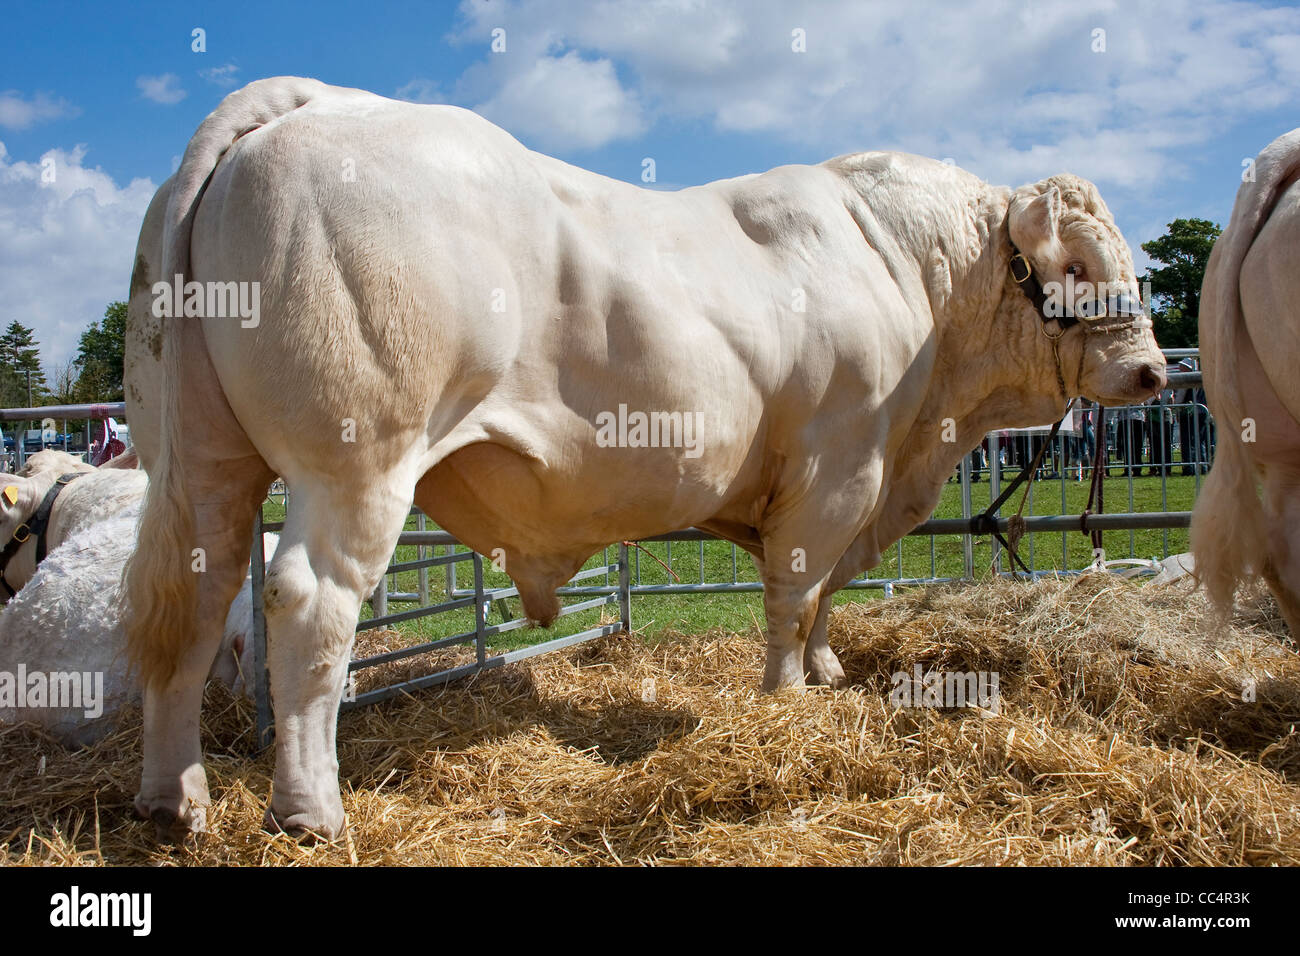 prize-winning-bull-profile-of-muscular-body-CC4R3K.jpg